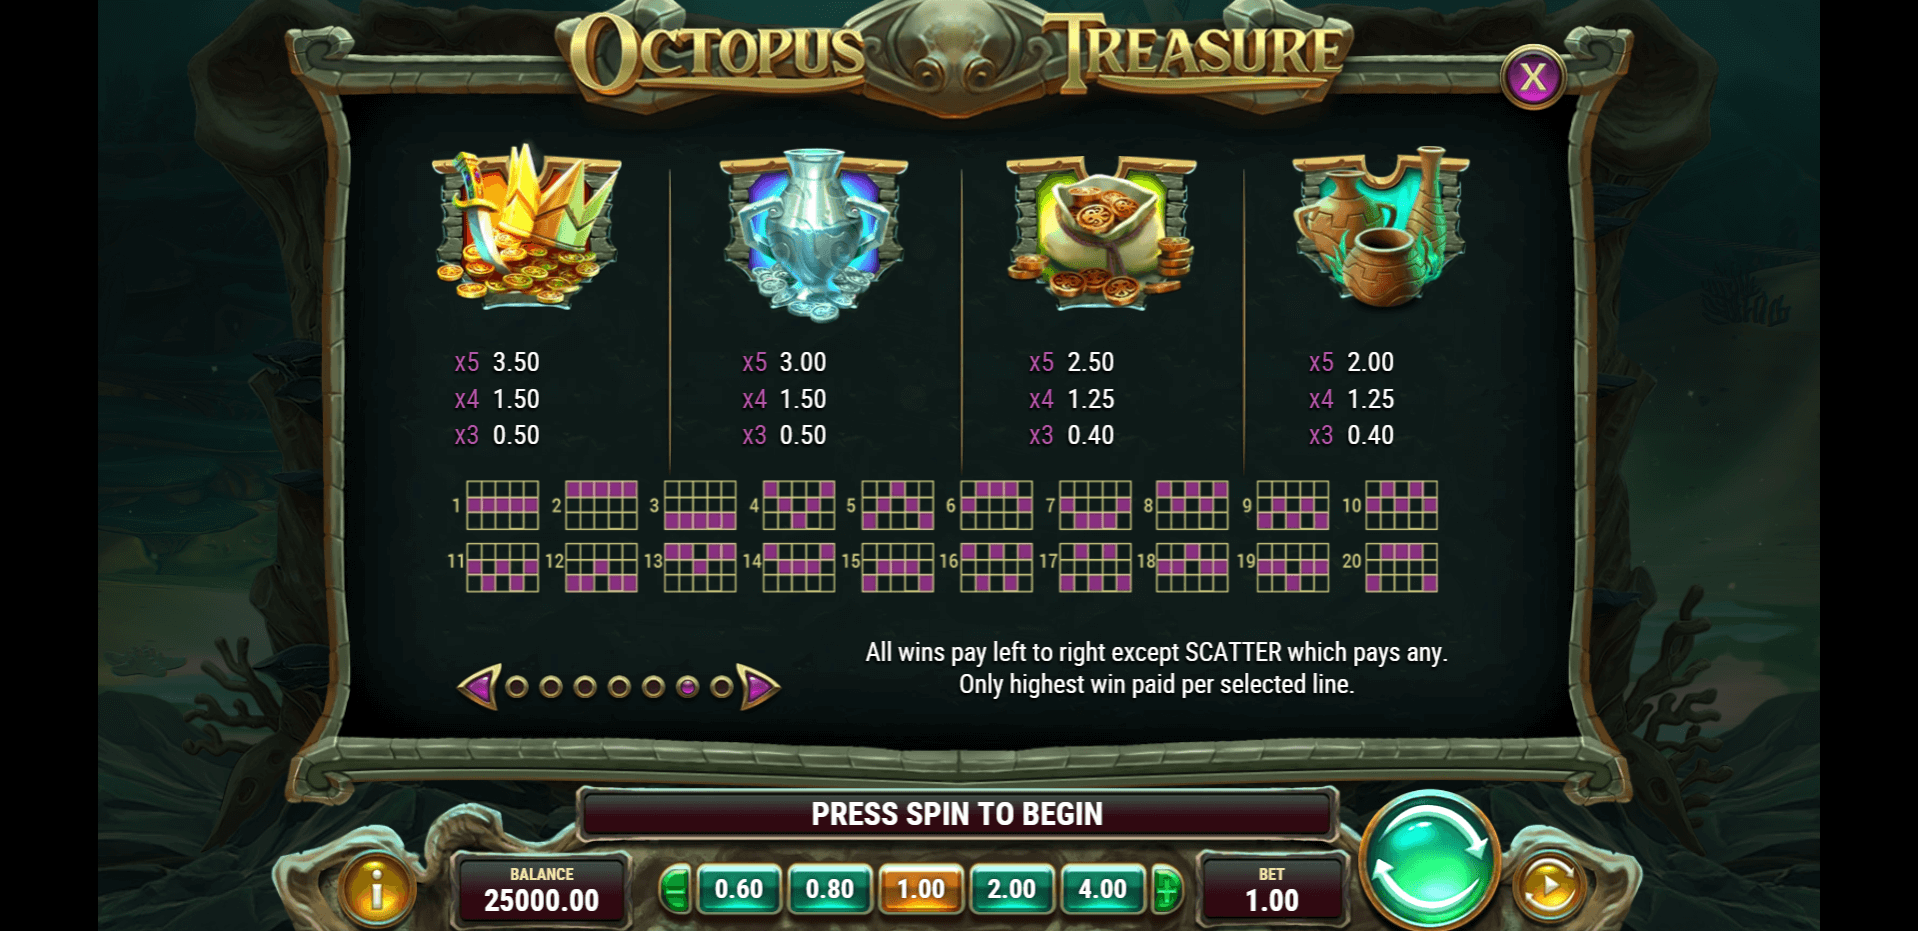 octopus treasure slot machine detail image 5